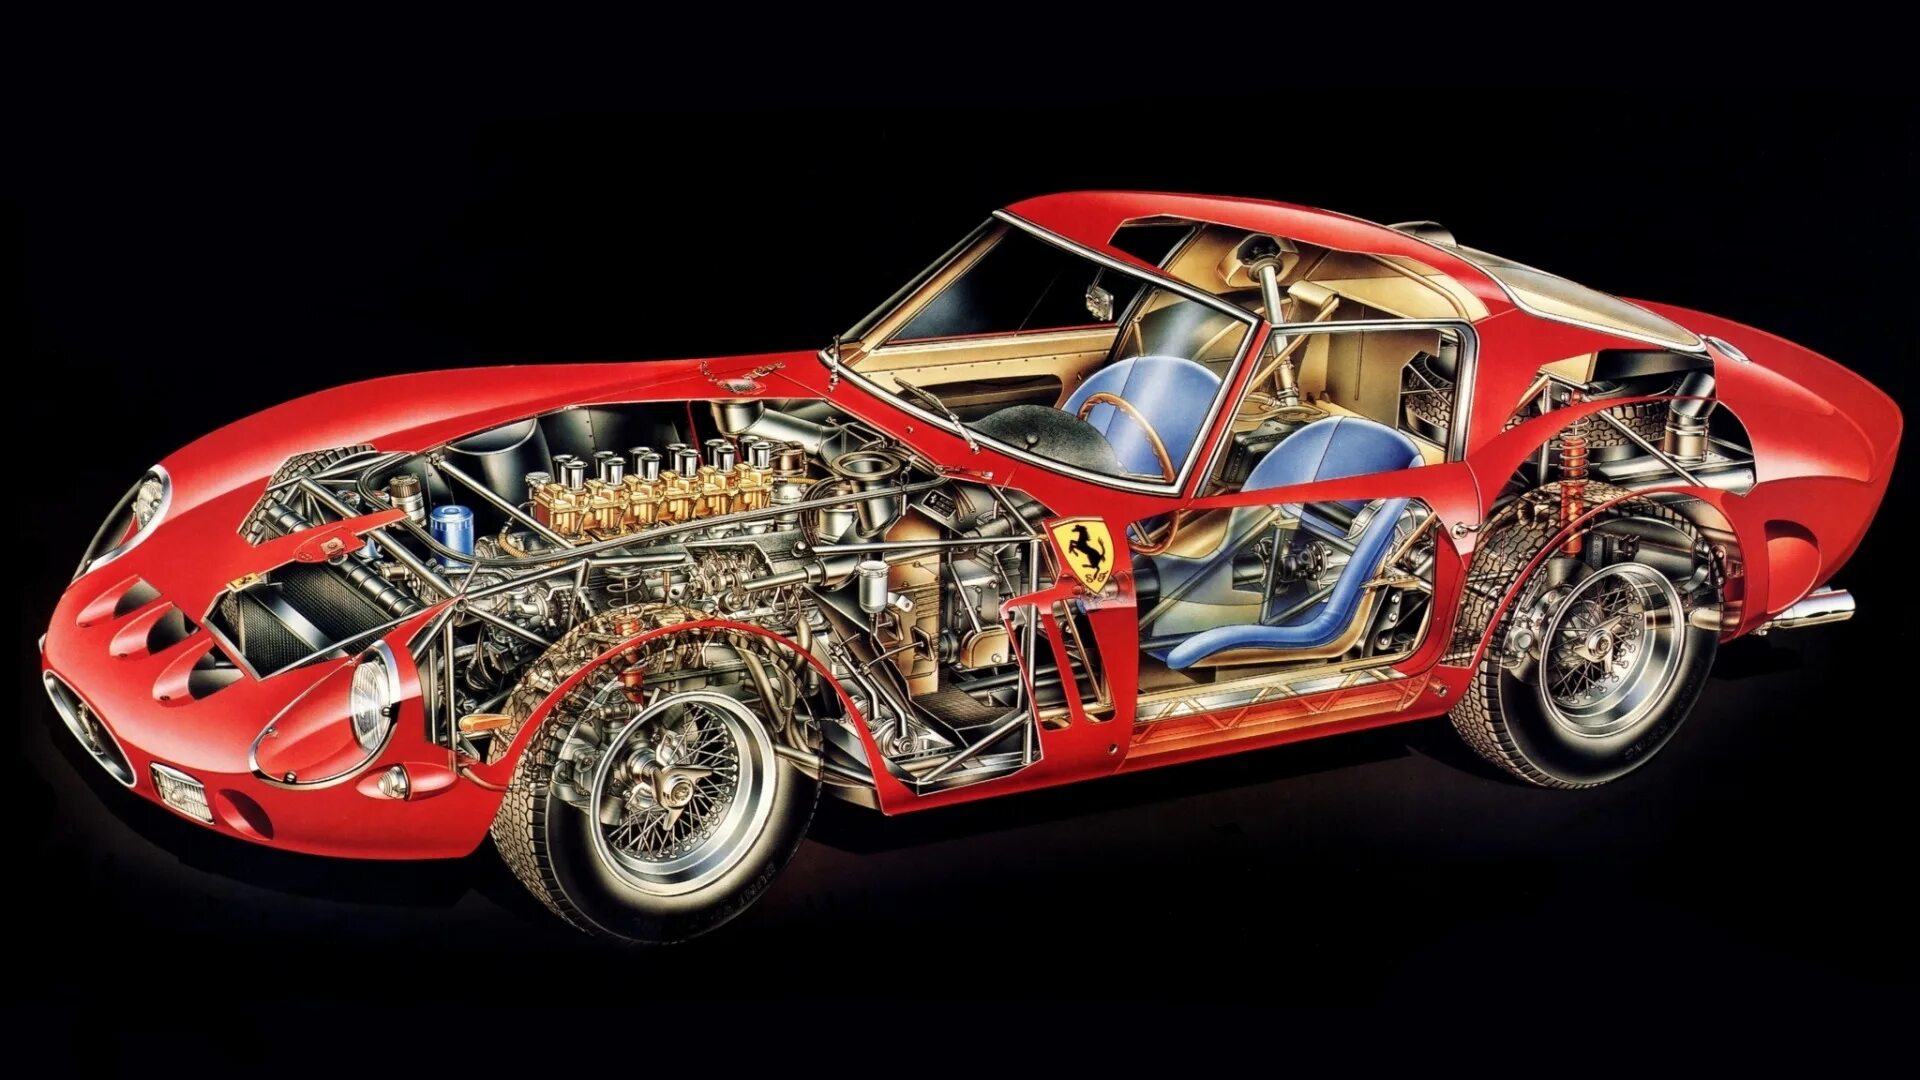 Ferrari gto 1962. Ferrari 250 GTO. Ferrari 250 GTO 1962. Car: 1962 Ferrari 250 GTO. Феррари 250 GTO двигатель.